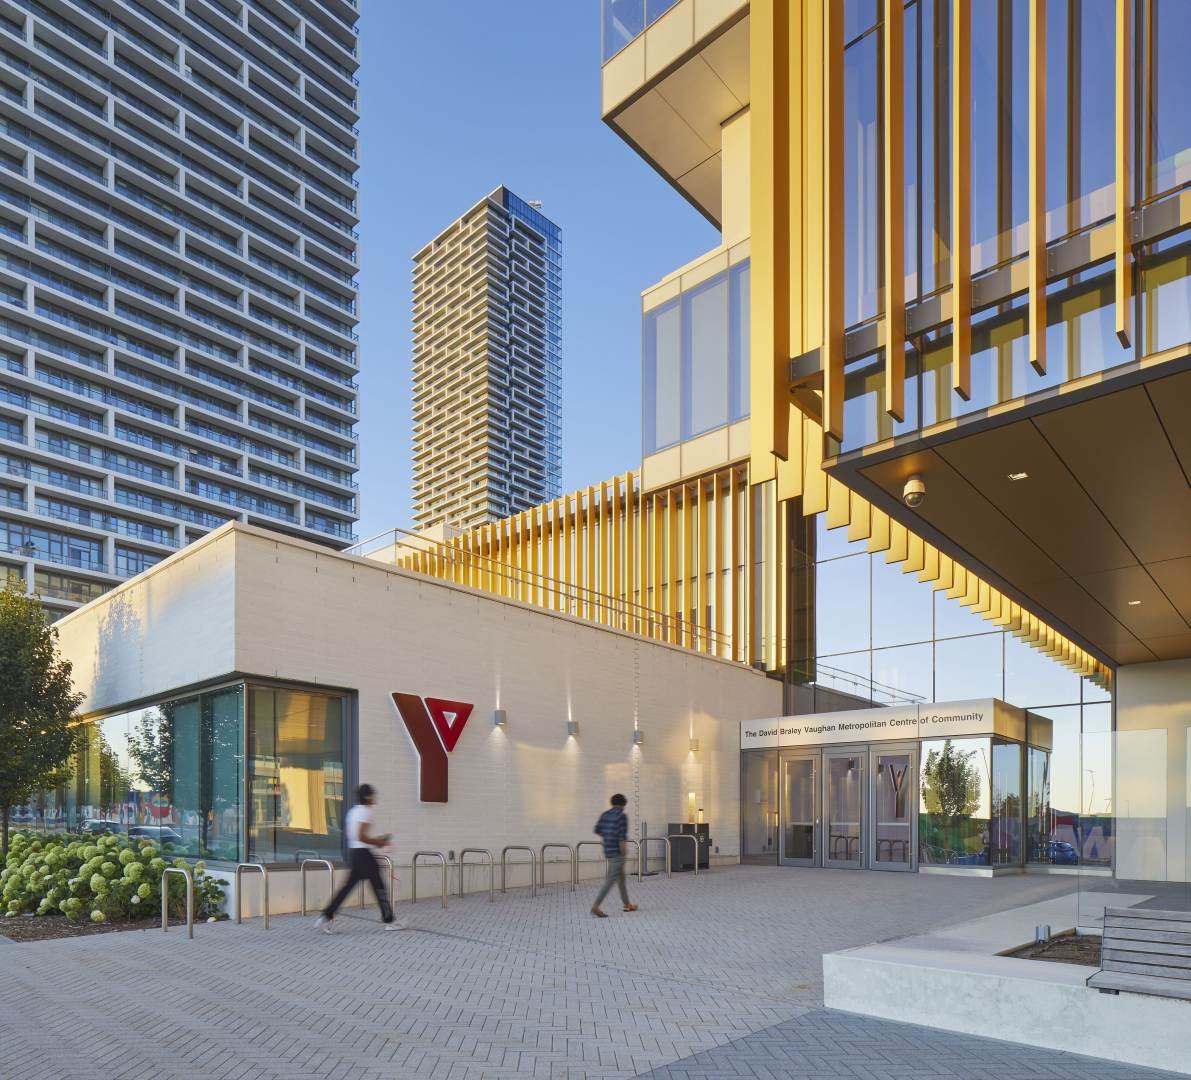 YMCA at The David Braley Vaughan Centre